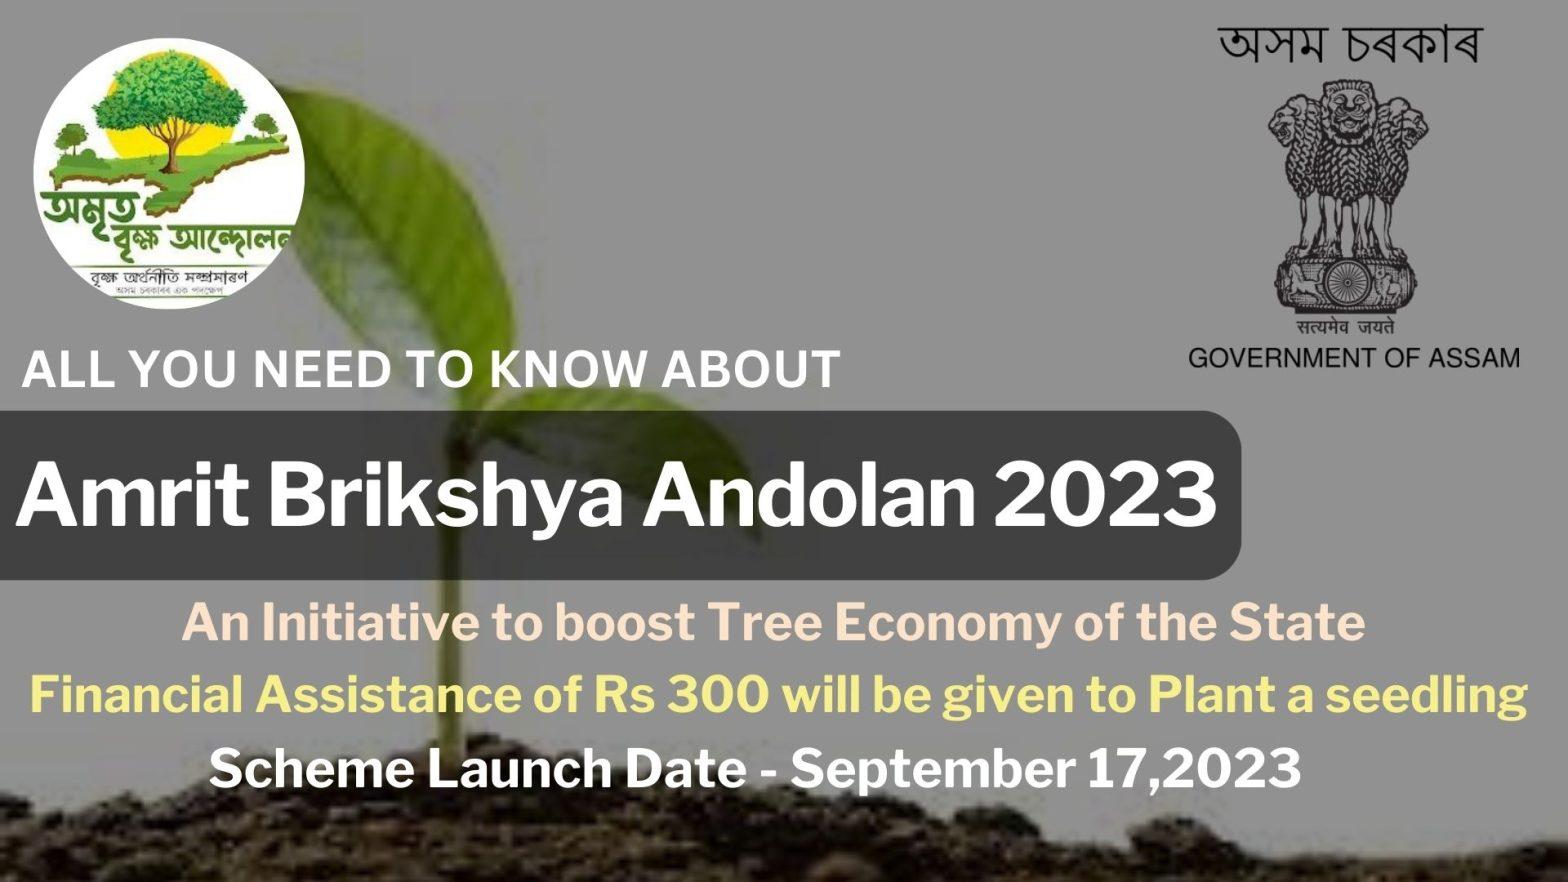 Amrit Brikshya Andolan 2023